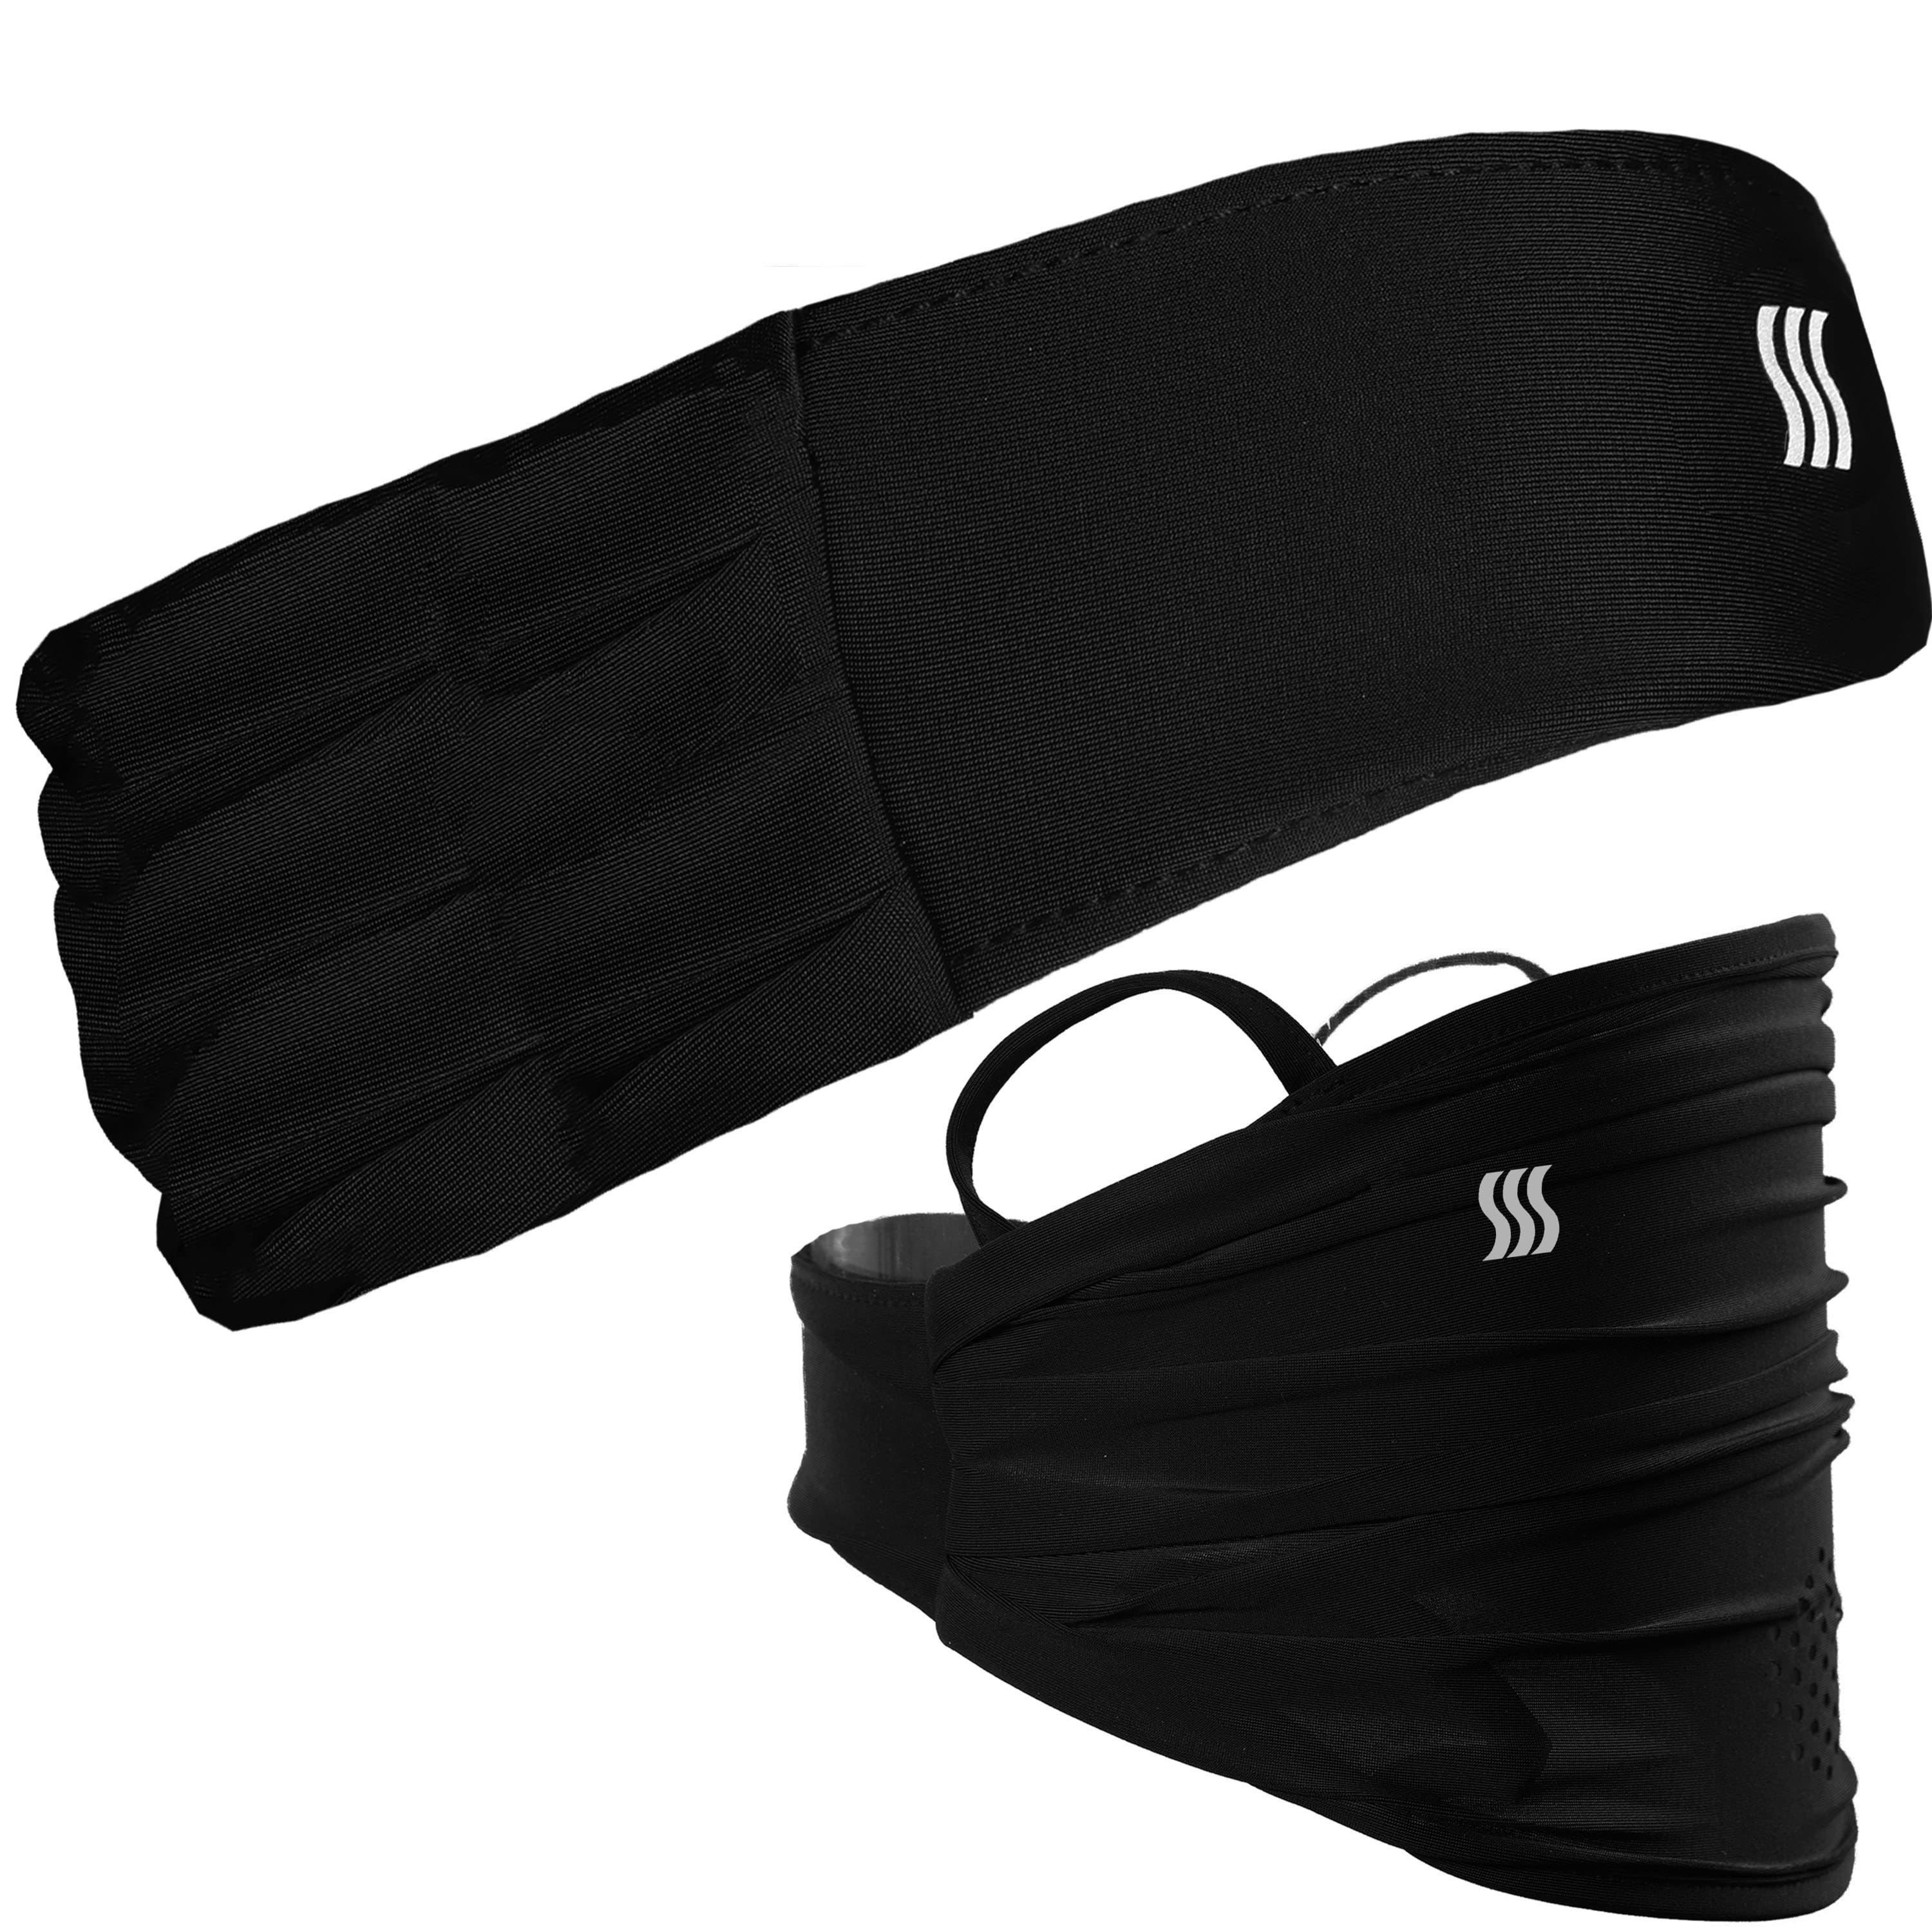 Extra wide headband for women & men in black.